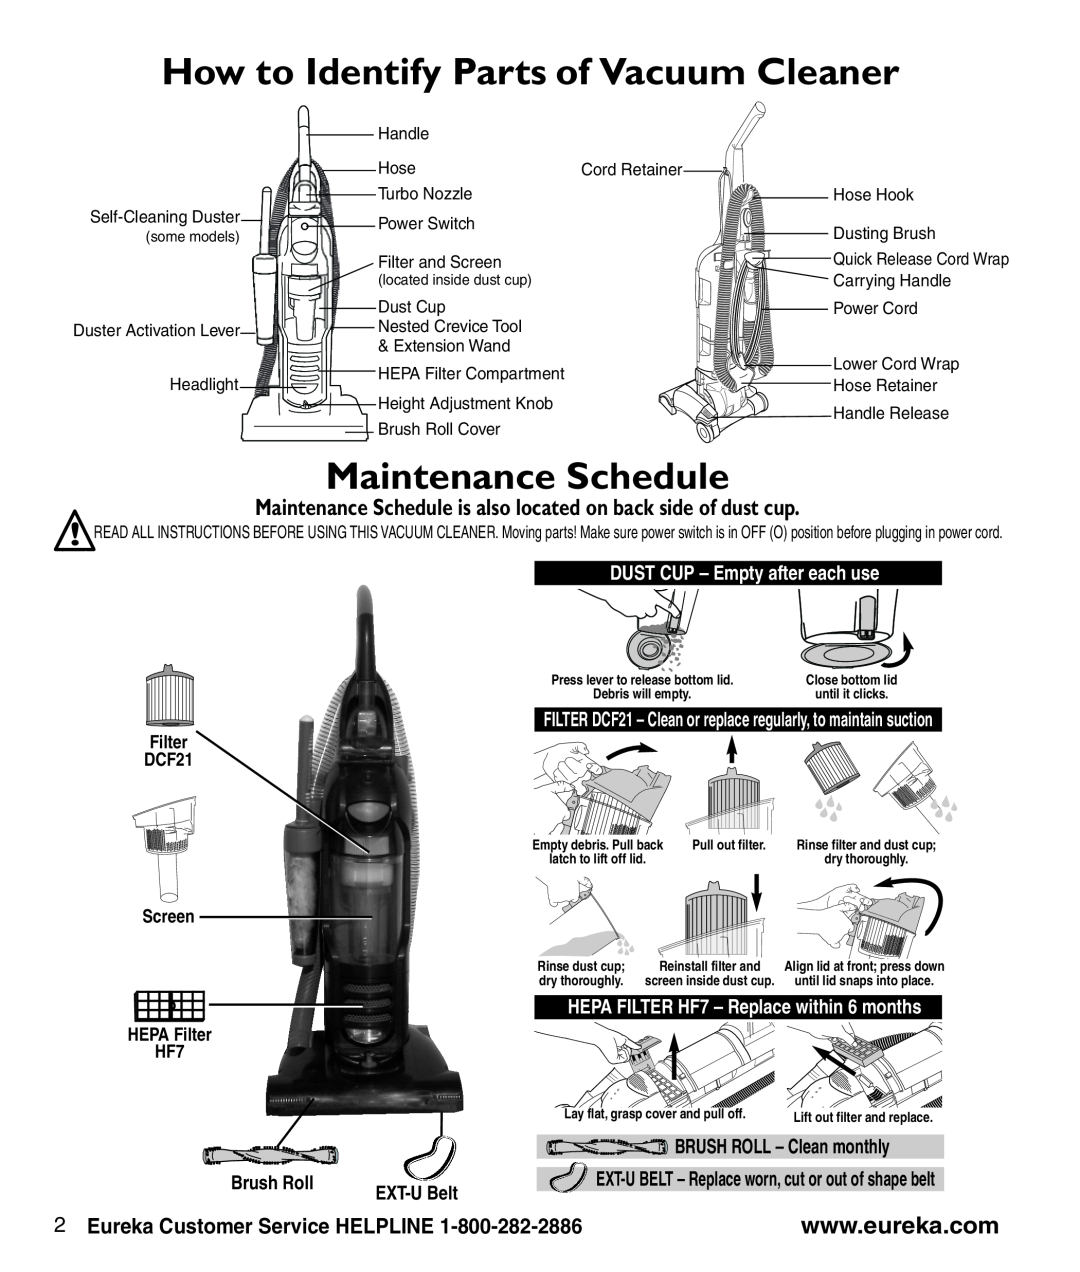 Eureka 3276-3280 How to Identify Parts of Vacuum Cleaner, Maintenance Schedule, Eureka Customer Service HELPLINE, Screen 